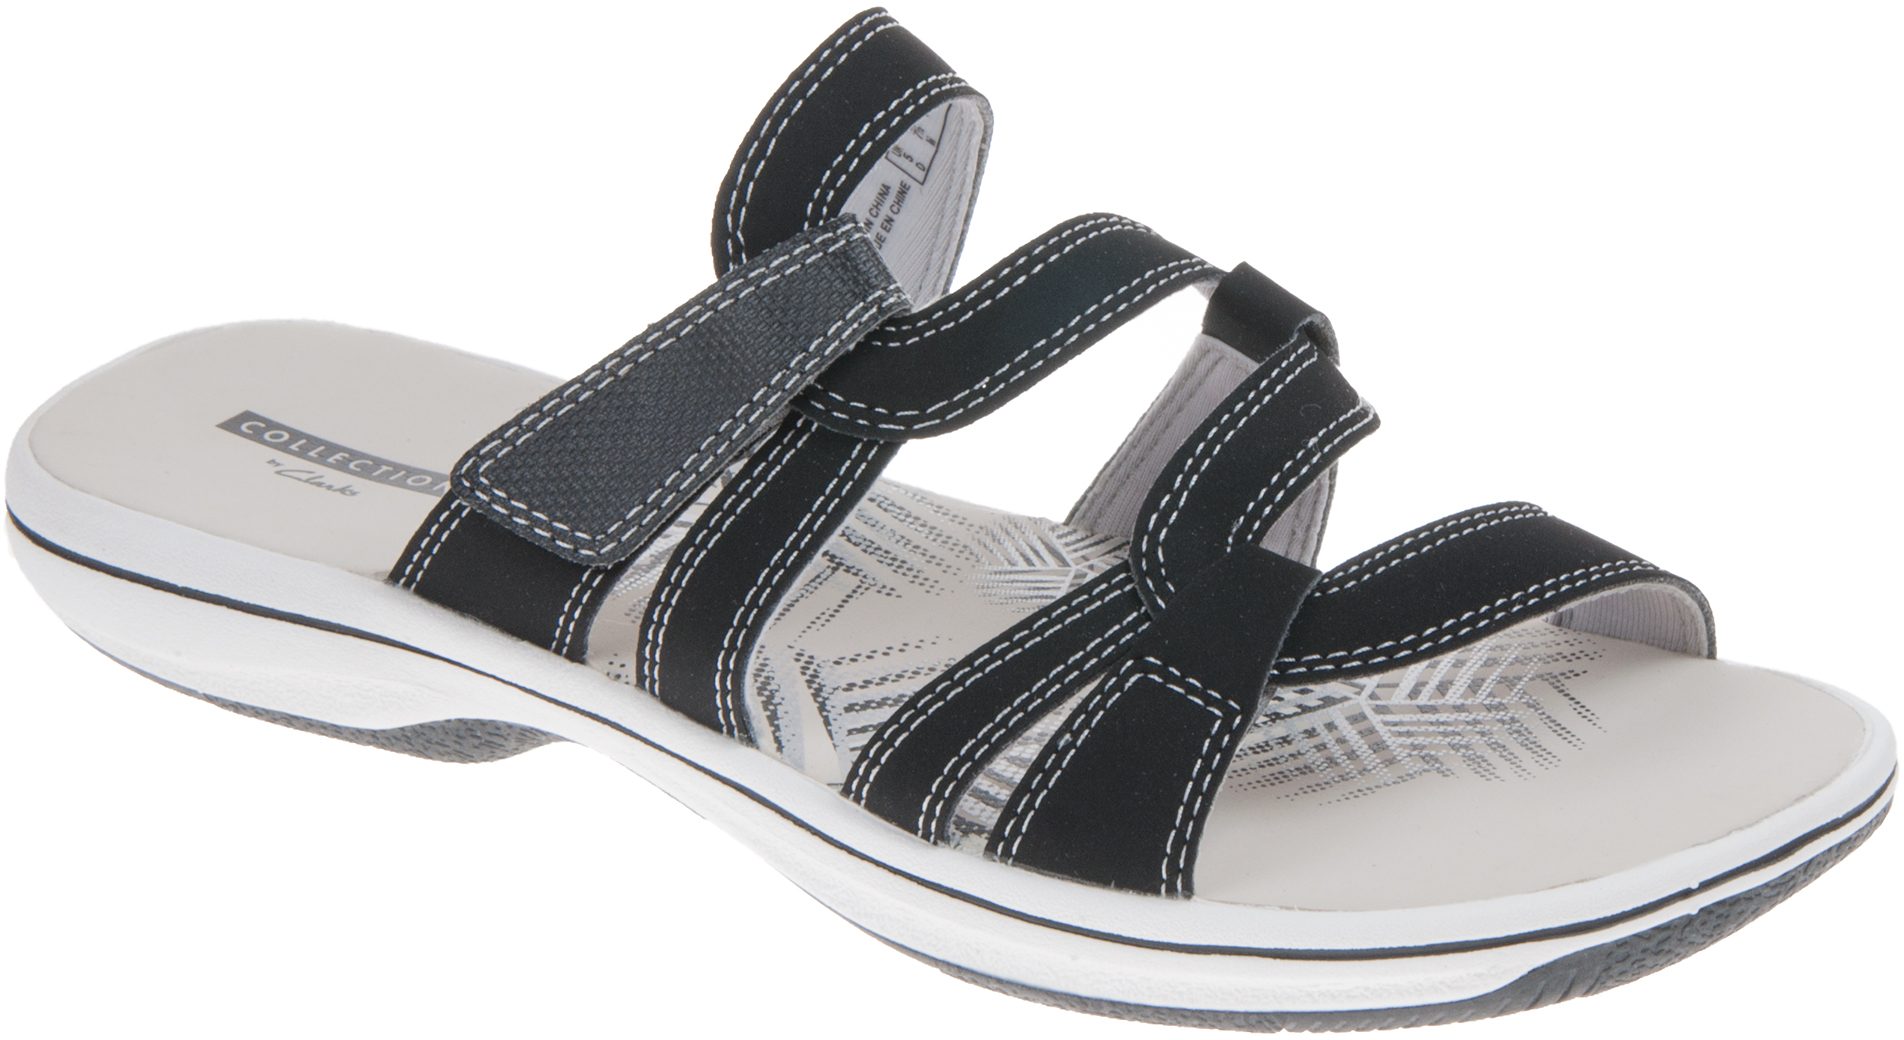 Clarks Brinkley Lonna Black 26129885 - Mule Sandals - Humphries Shoes